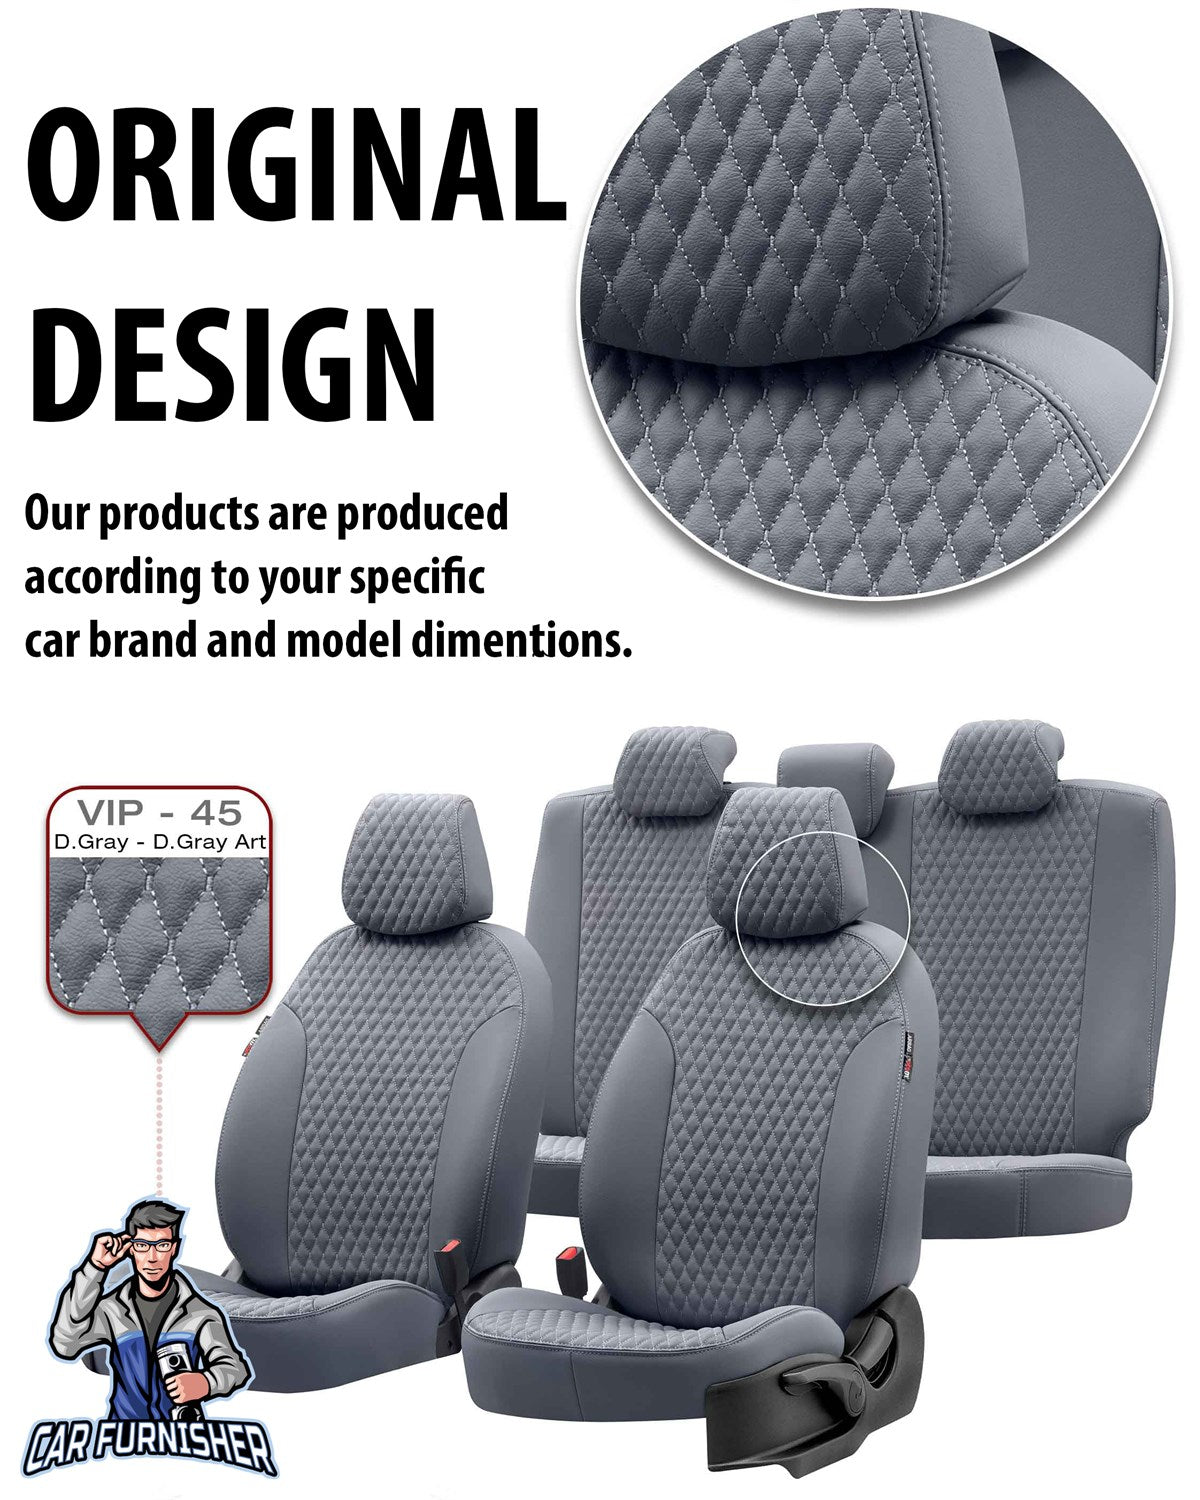 Honda City Seat Covers Amsterdam Leather Design Black Leather